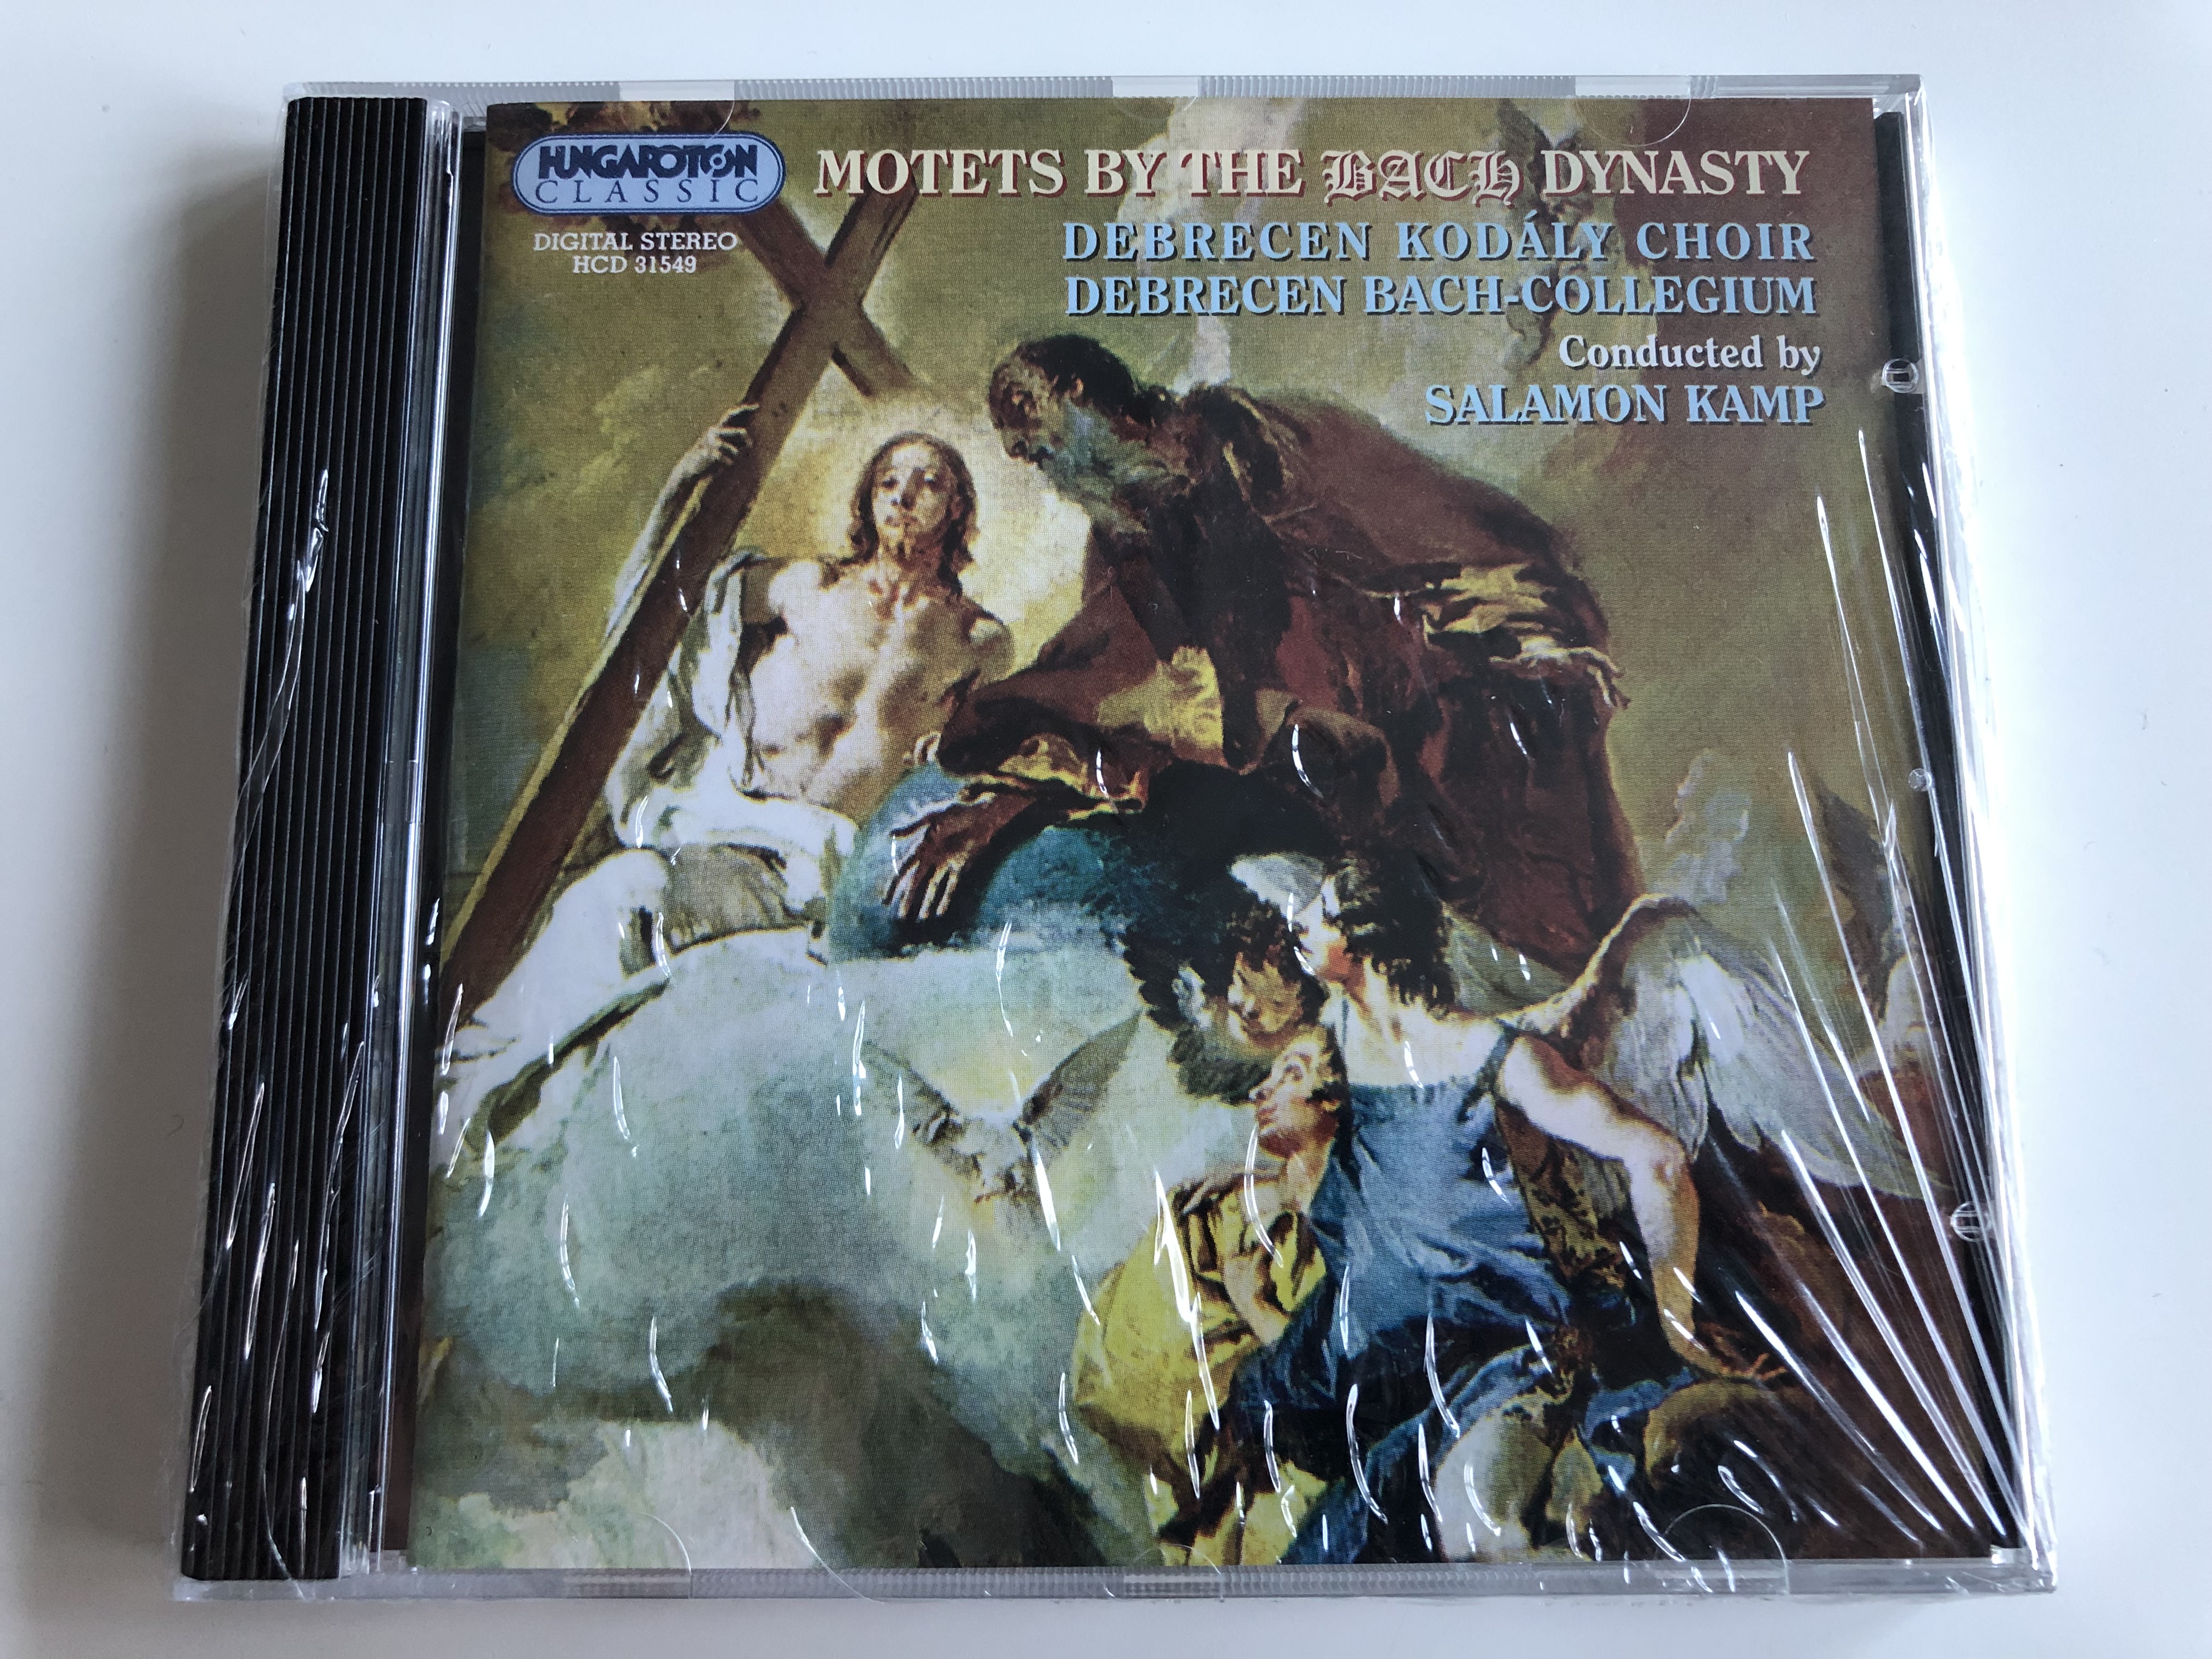 motets-by-the-bach-dynasty-debrecen-kodaly-choir-debrecen-bach-collegium-conducted-by-salamon-kamp-hungaroton-classic-audio-cd-1992-stereo-hcd-31549-1-.jpg